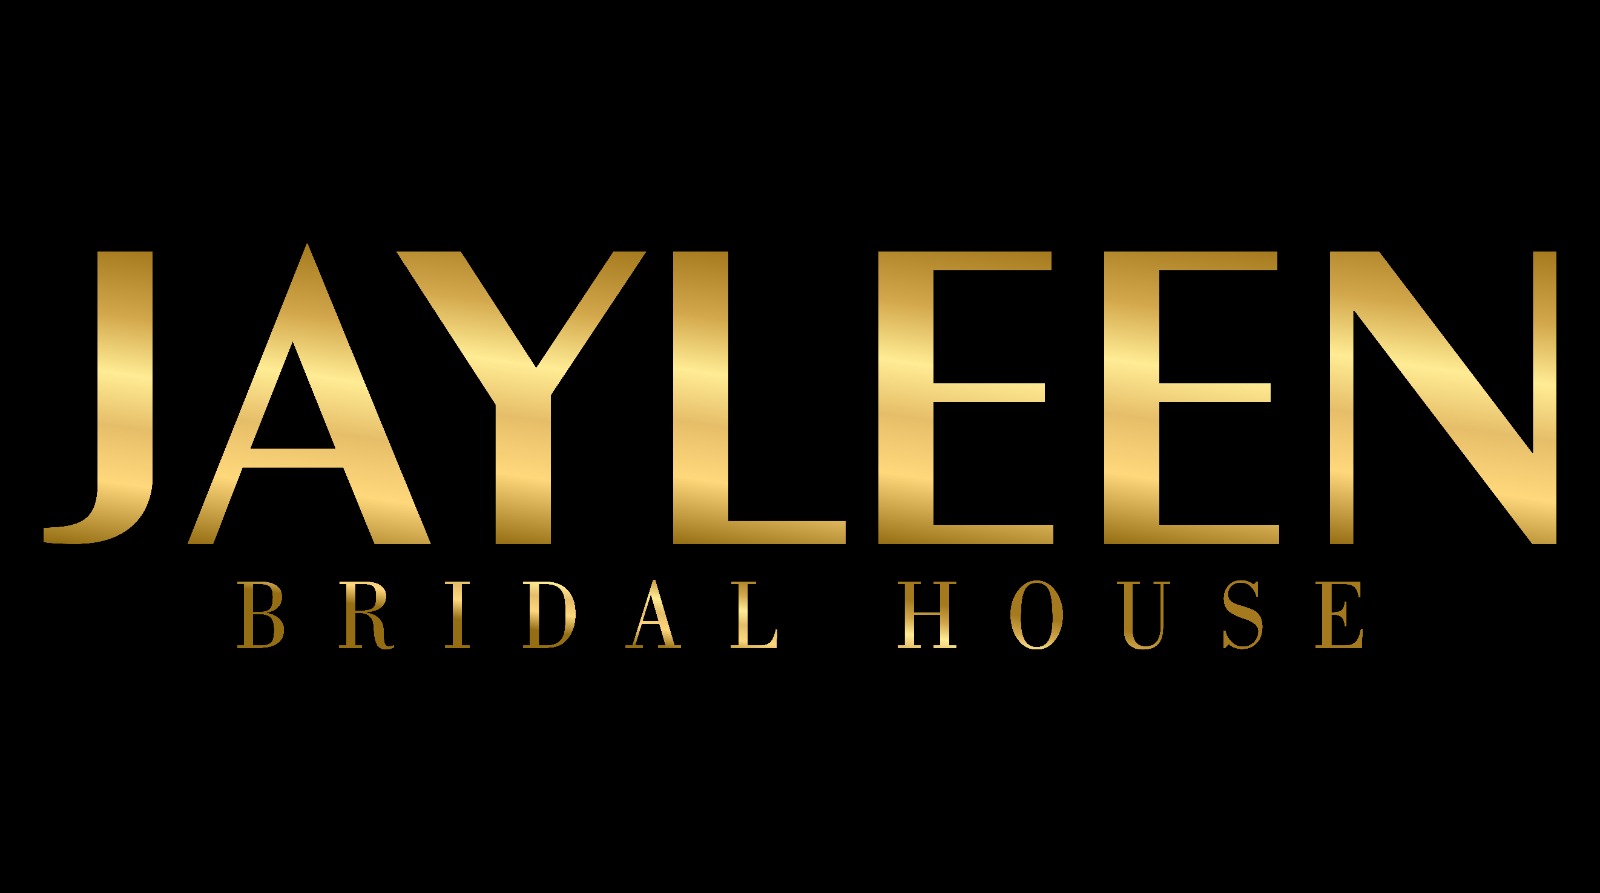 JAYLEEN BRIDAL HOUSE